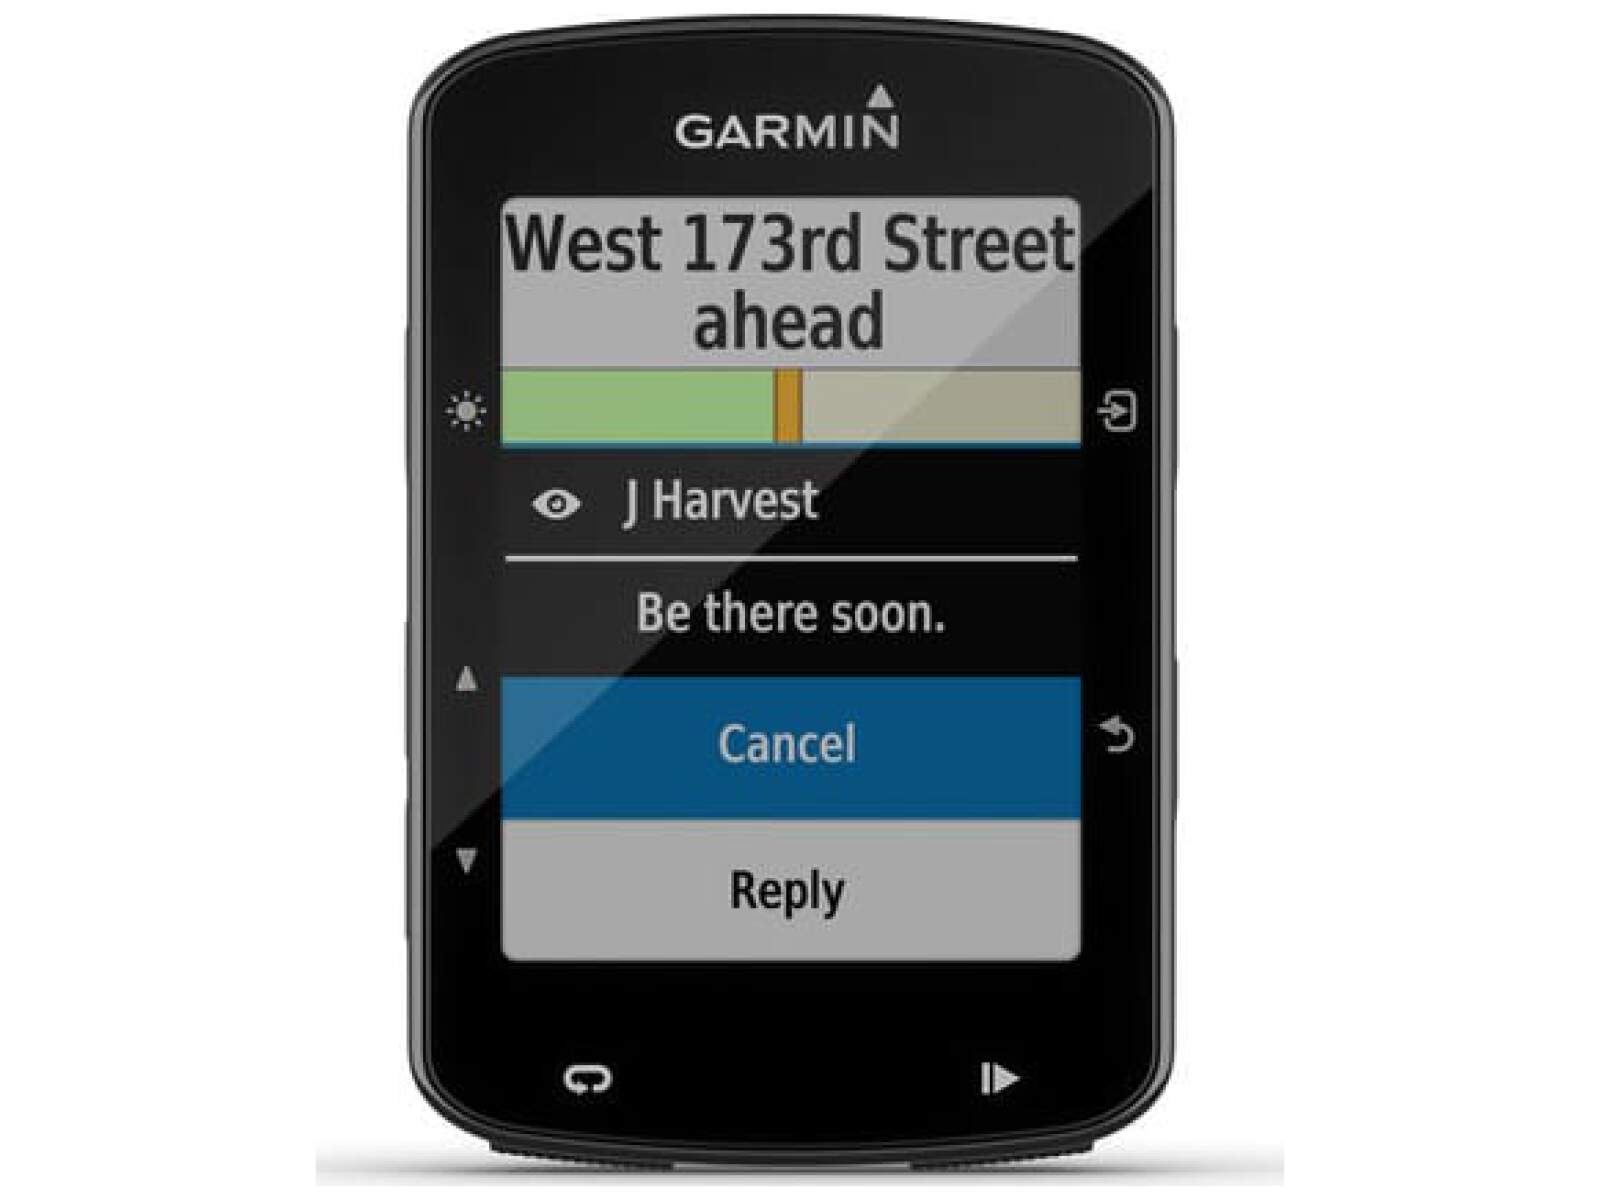 Licznik rowerowy Garmin Edge® 520 Plus